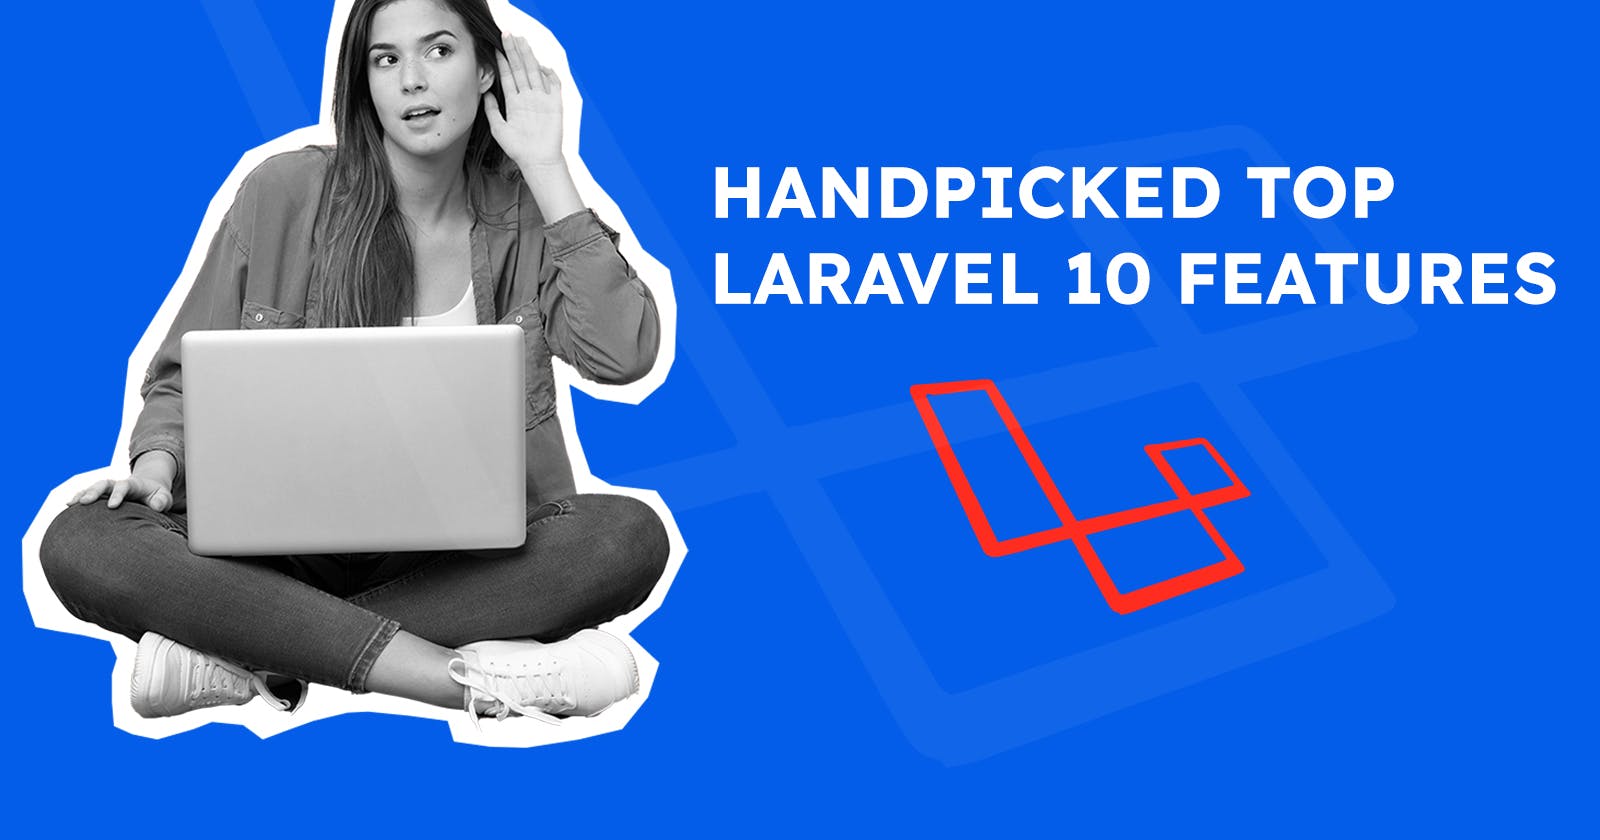 Handpicked Top Laravel 10 Features